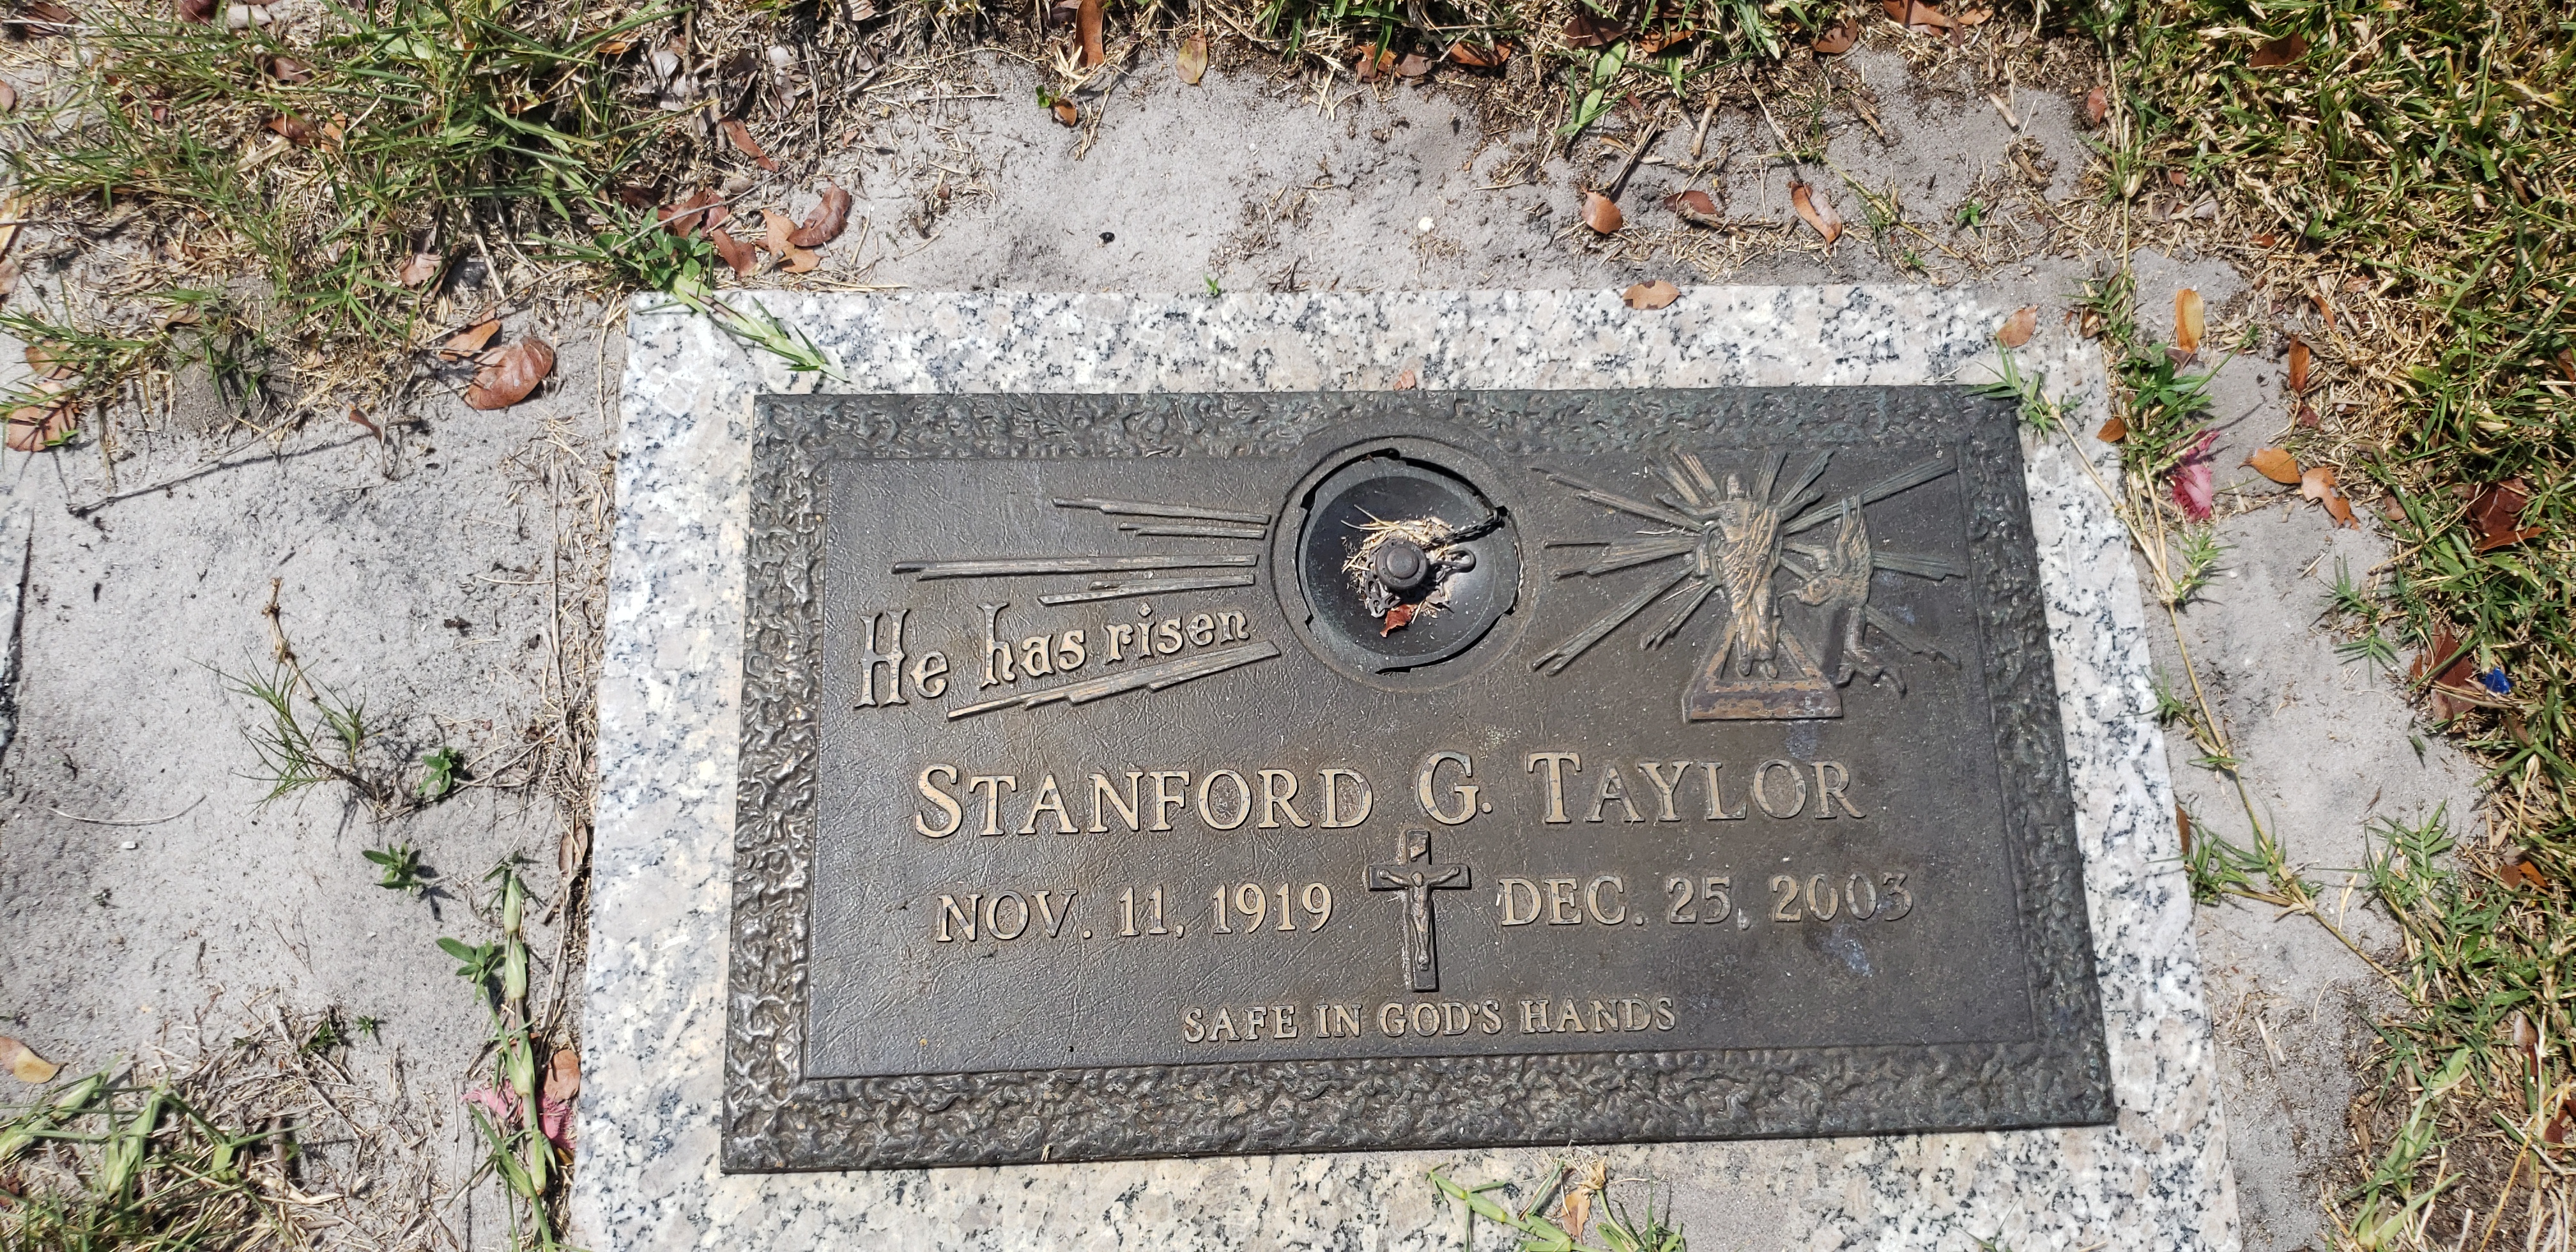 Stanford G Taylor